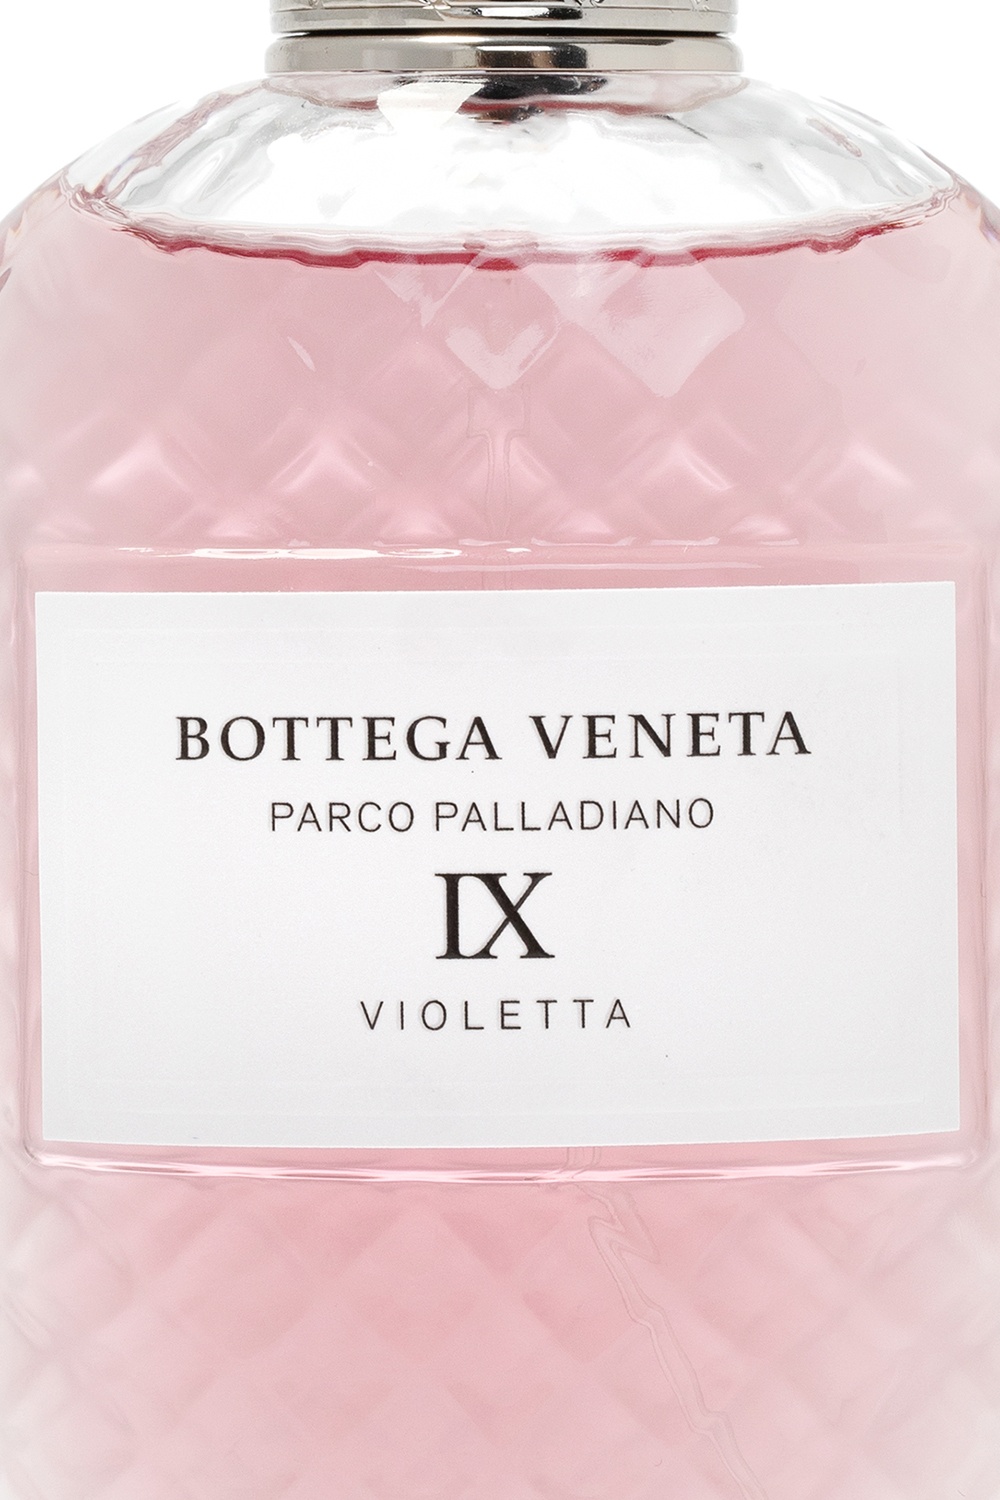 Bottega Veneta ‘Parco Palladiano IX Violetta’ eau de parfum